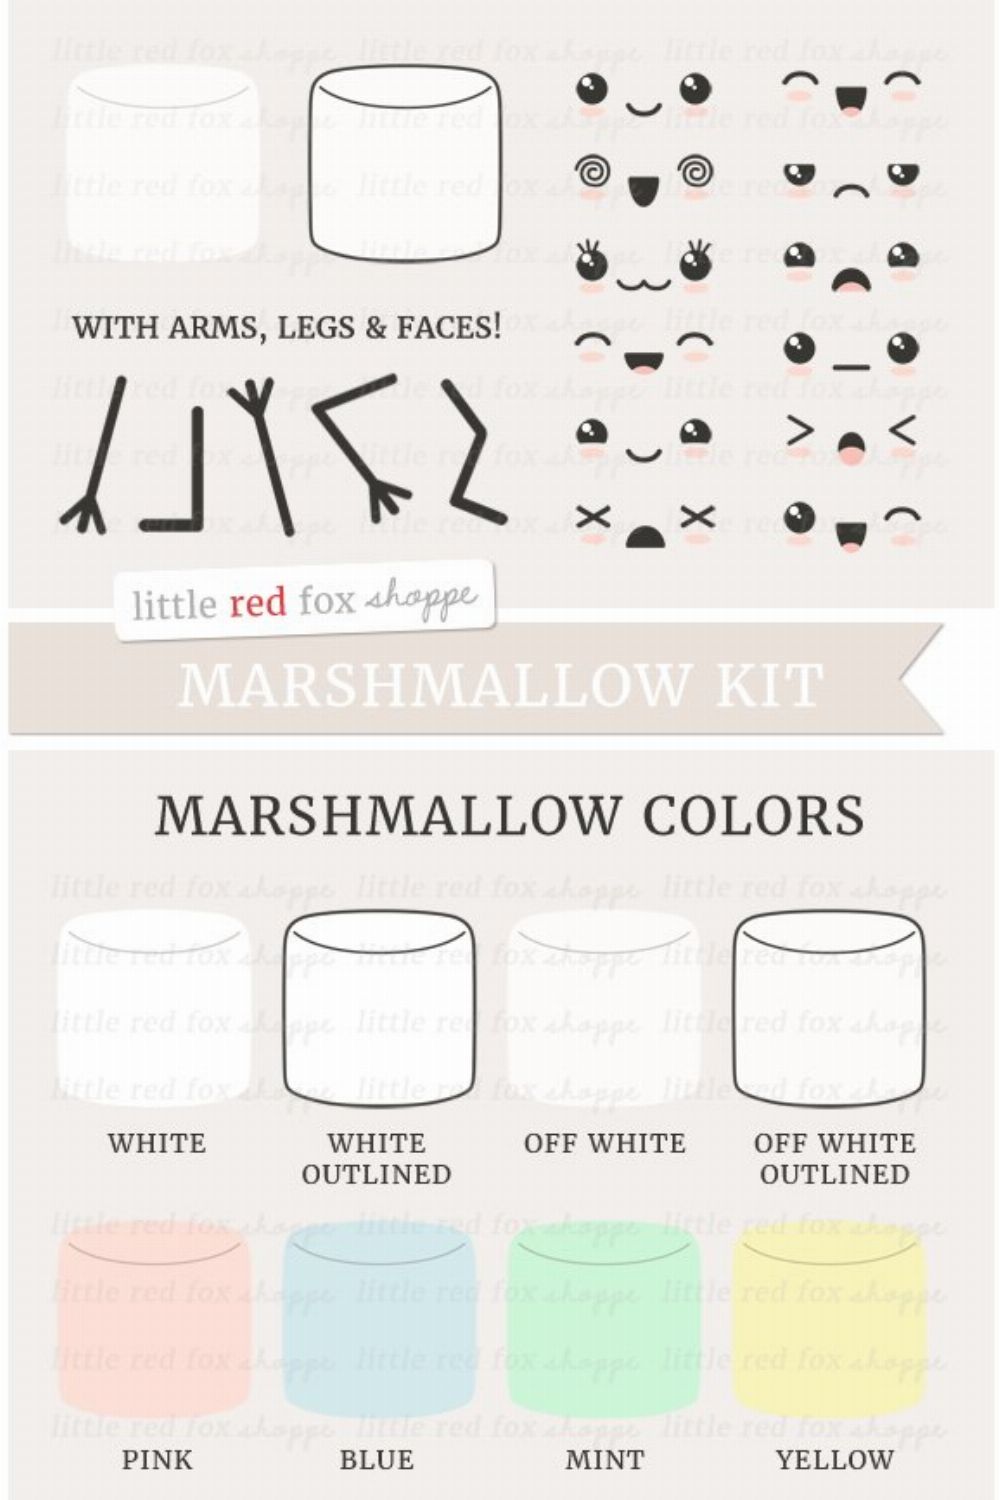 Marshmallow Kit Clipart pinterest preview image.